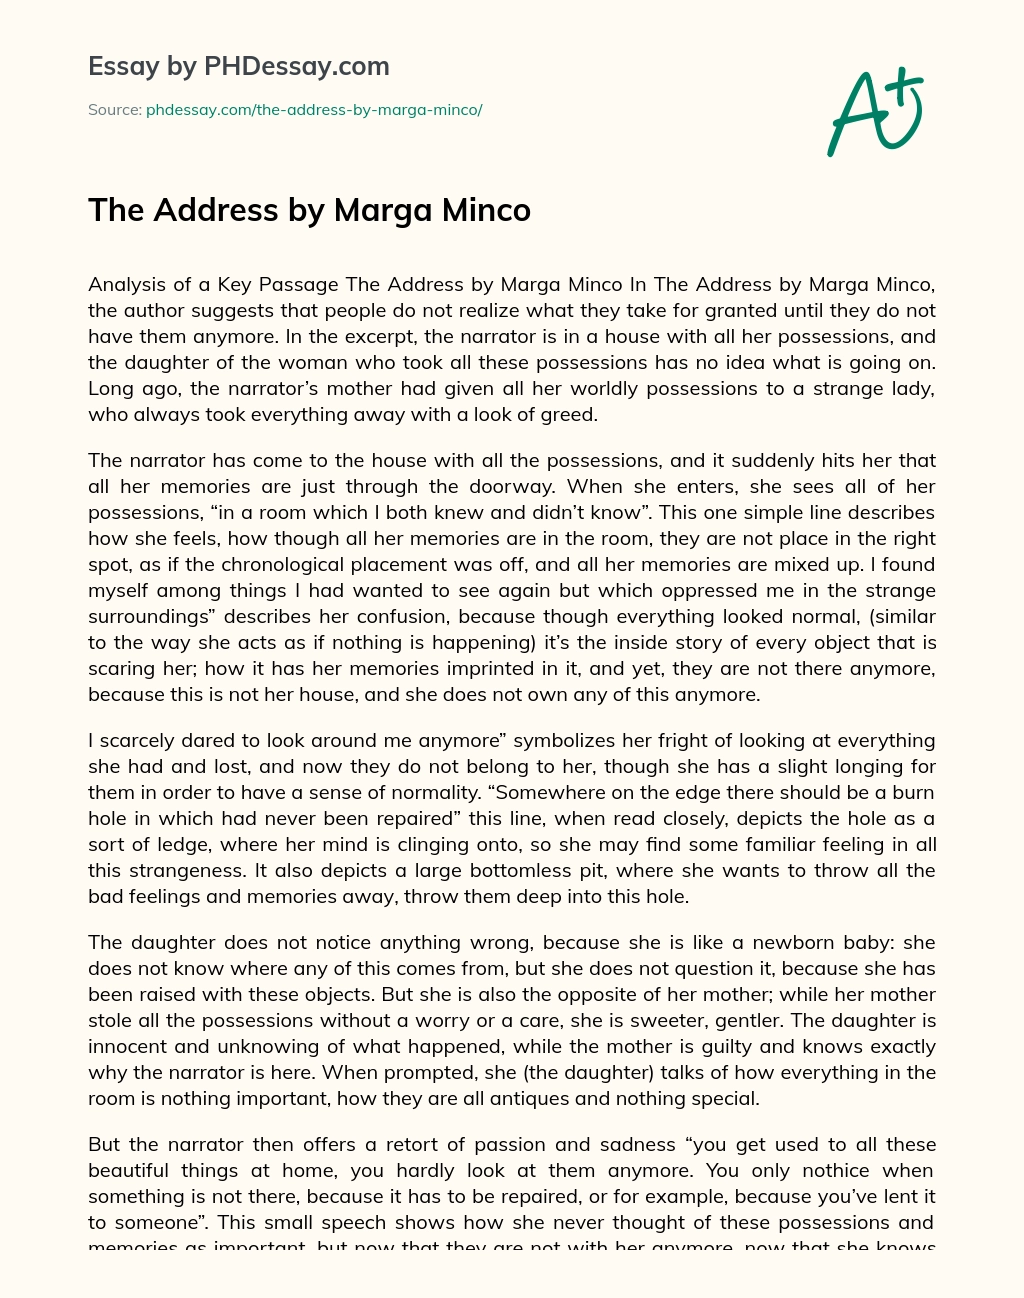 The Address by Marga Minco essay